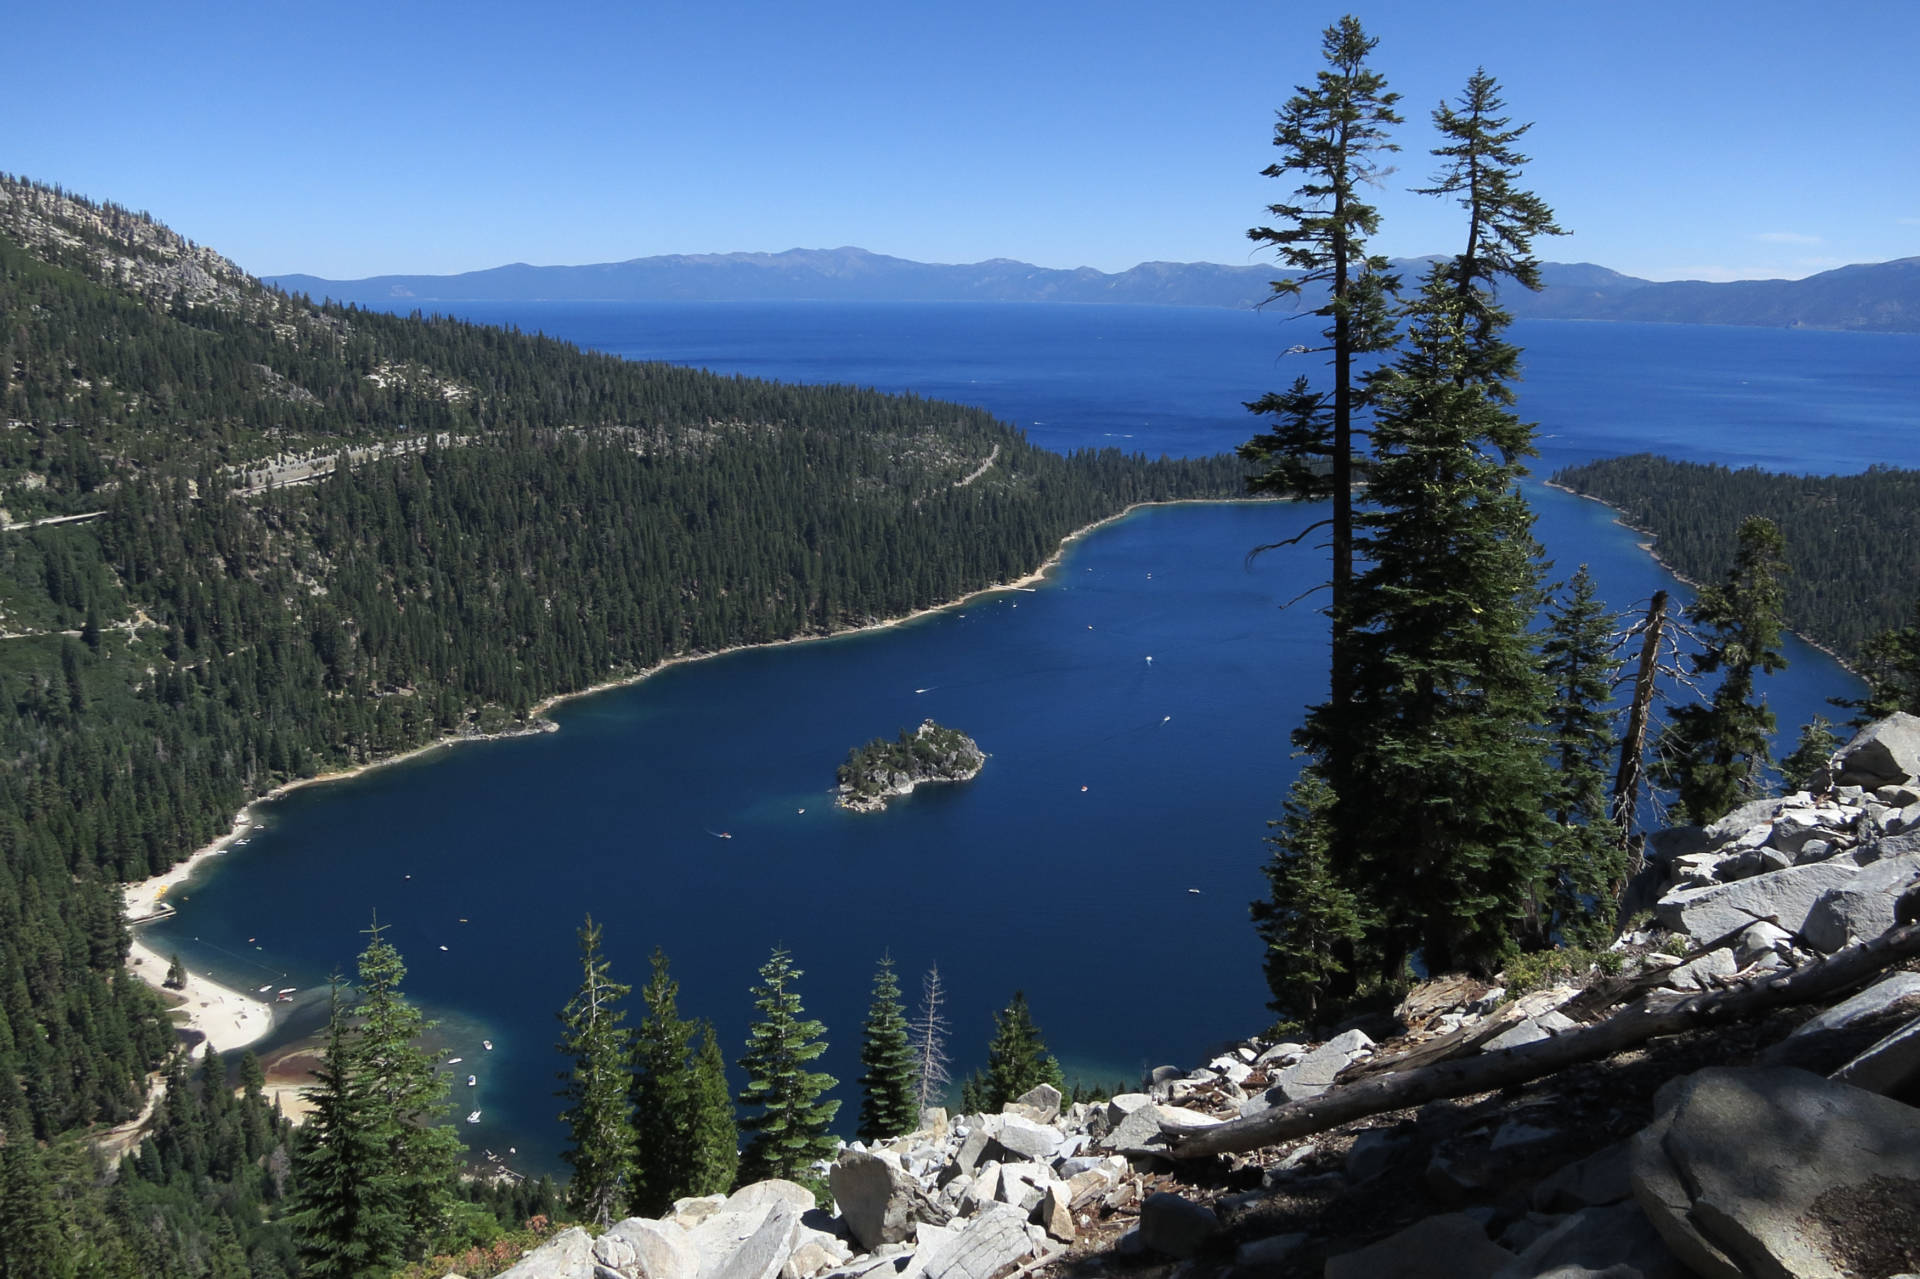 Emerald Bay lies under blue skies at Lake Tahoe. Sean Gallup/Getty Images